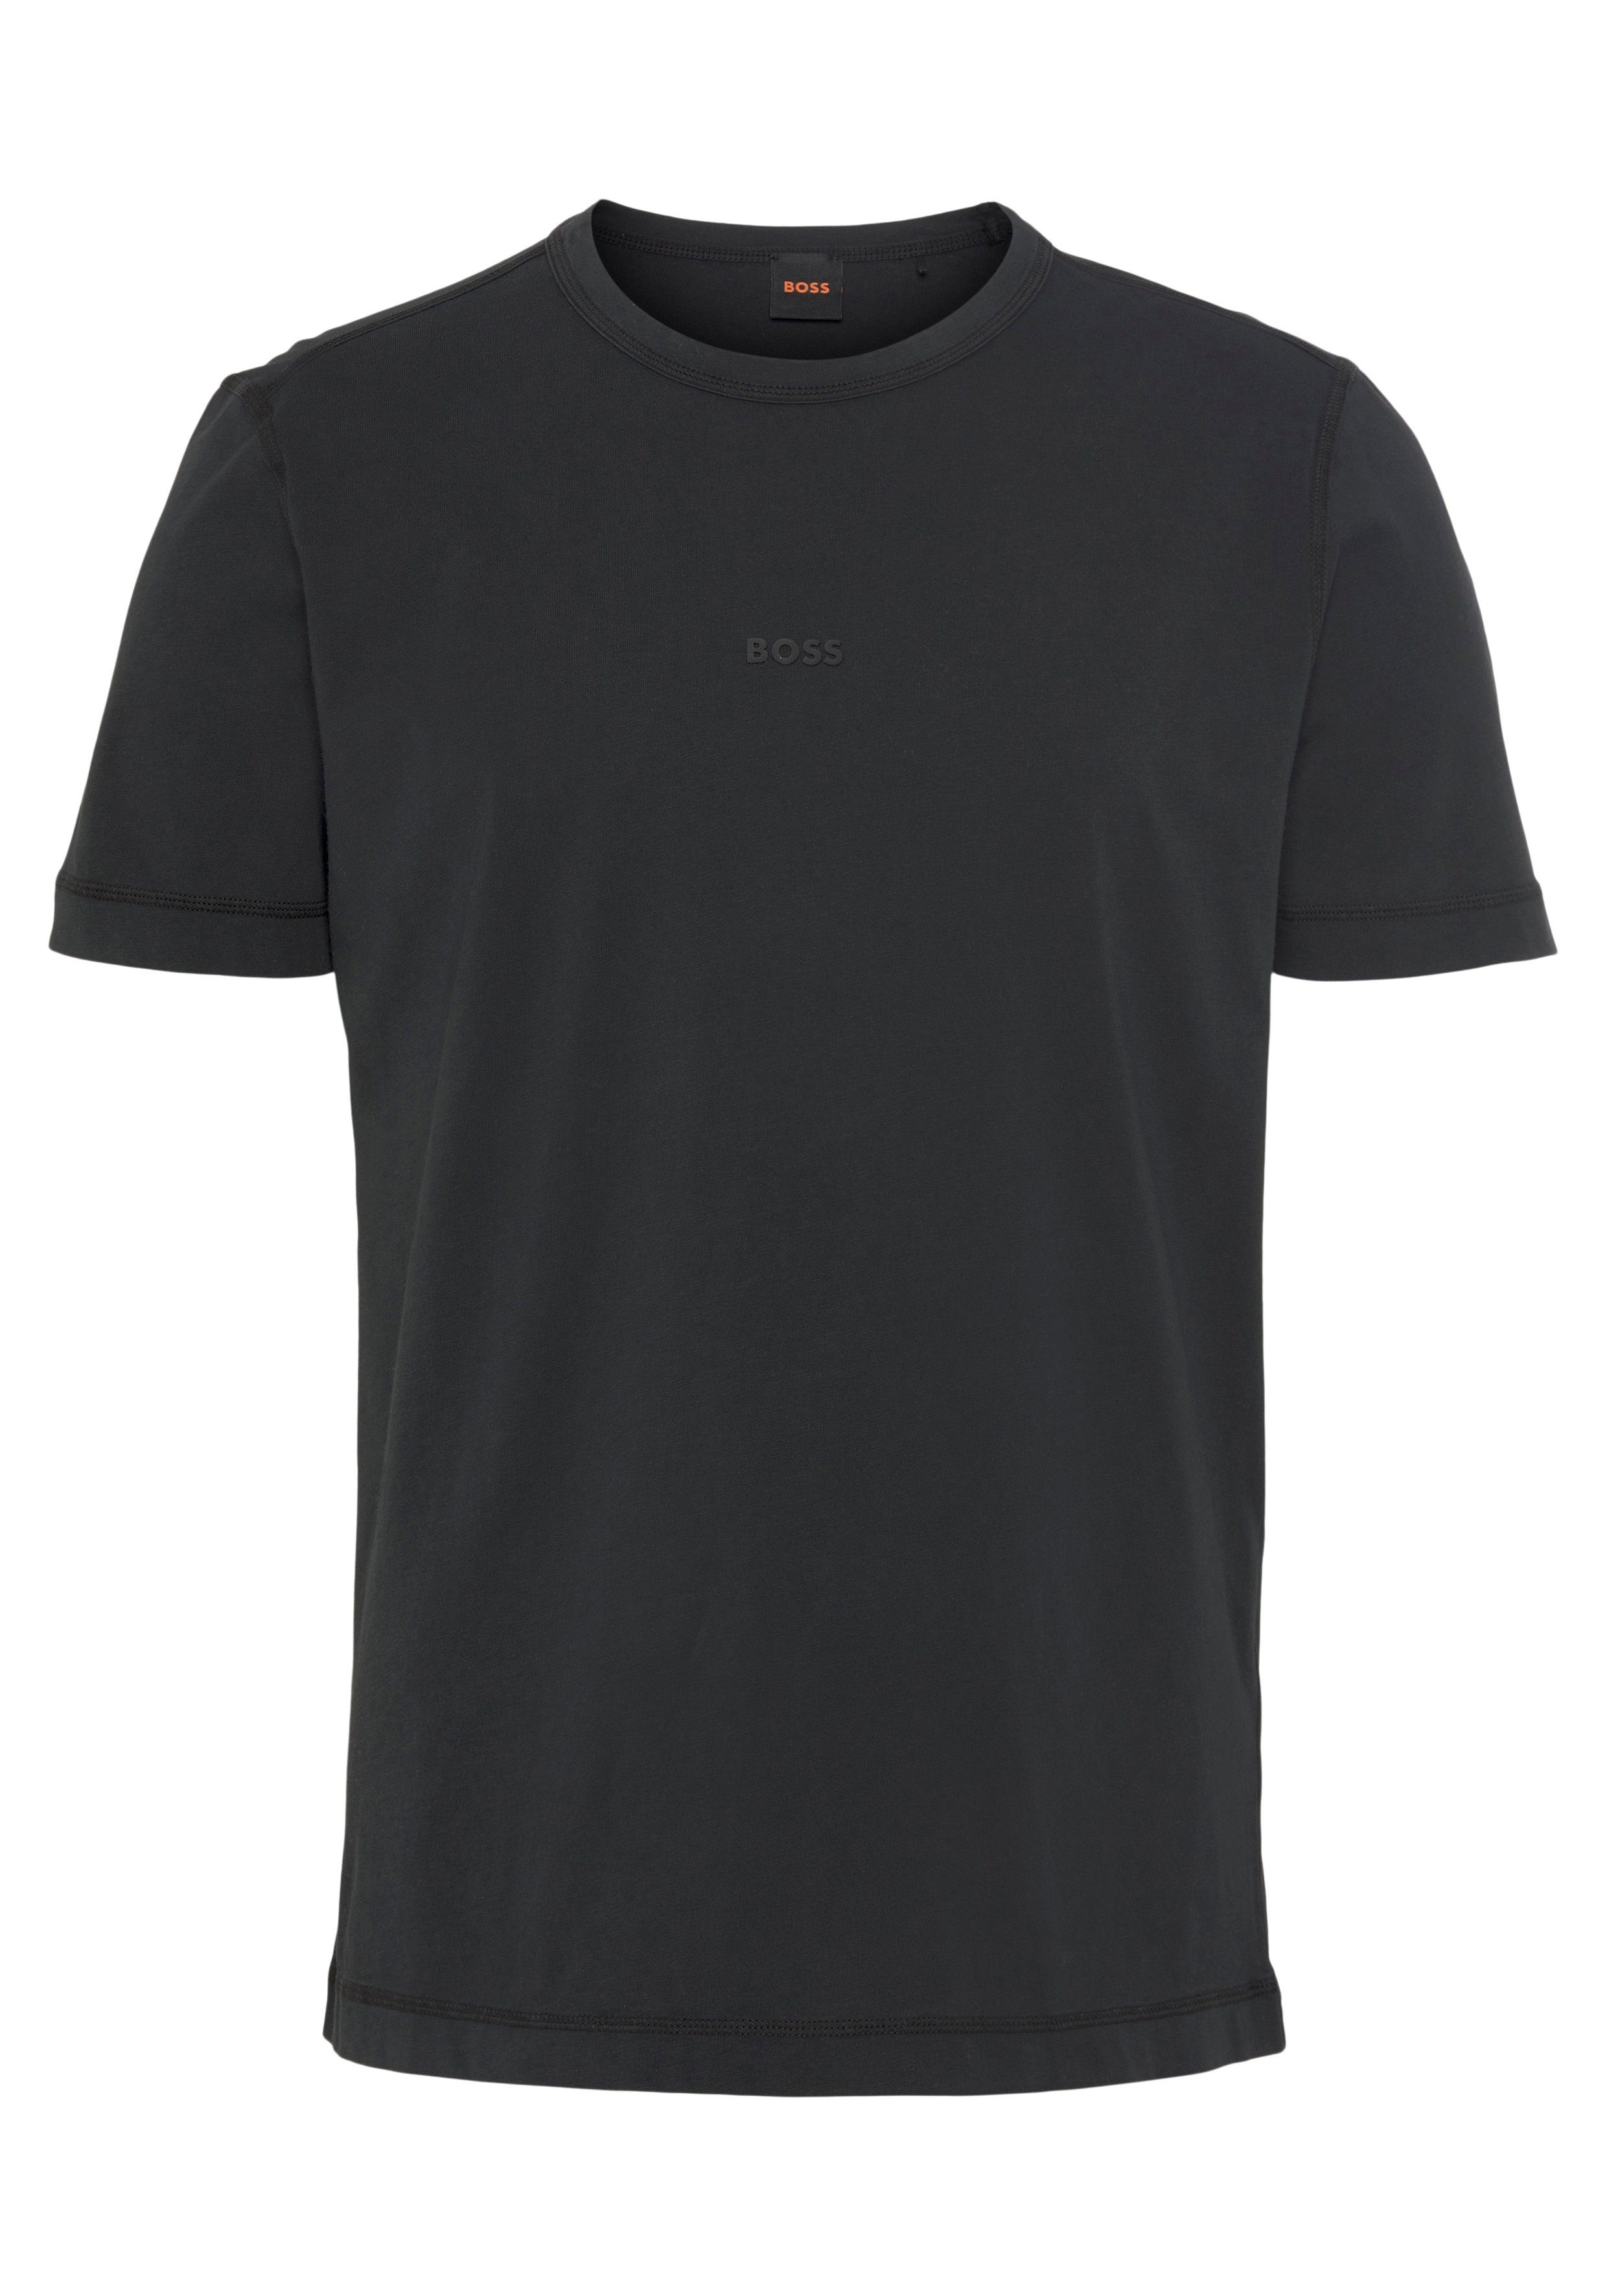 BOSS ORANGE black001 Markenlabel mit ORANGE BOSS Tokks T-Shirt